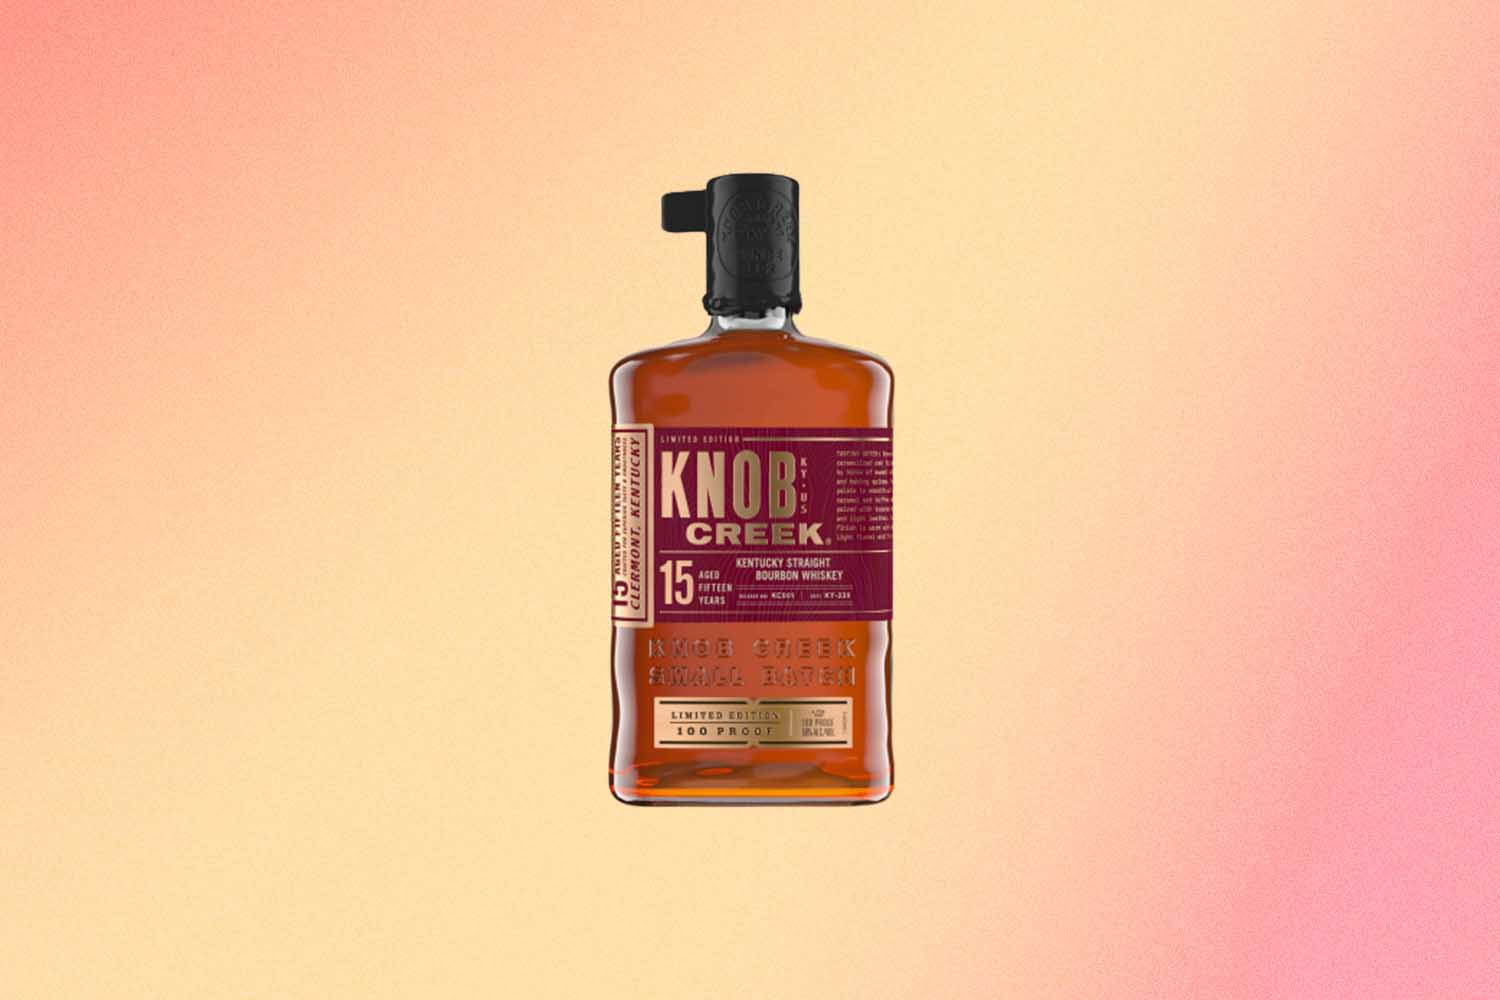 A bottle of Knob Creek 15 Year Bourbon